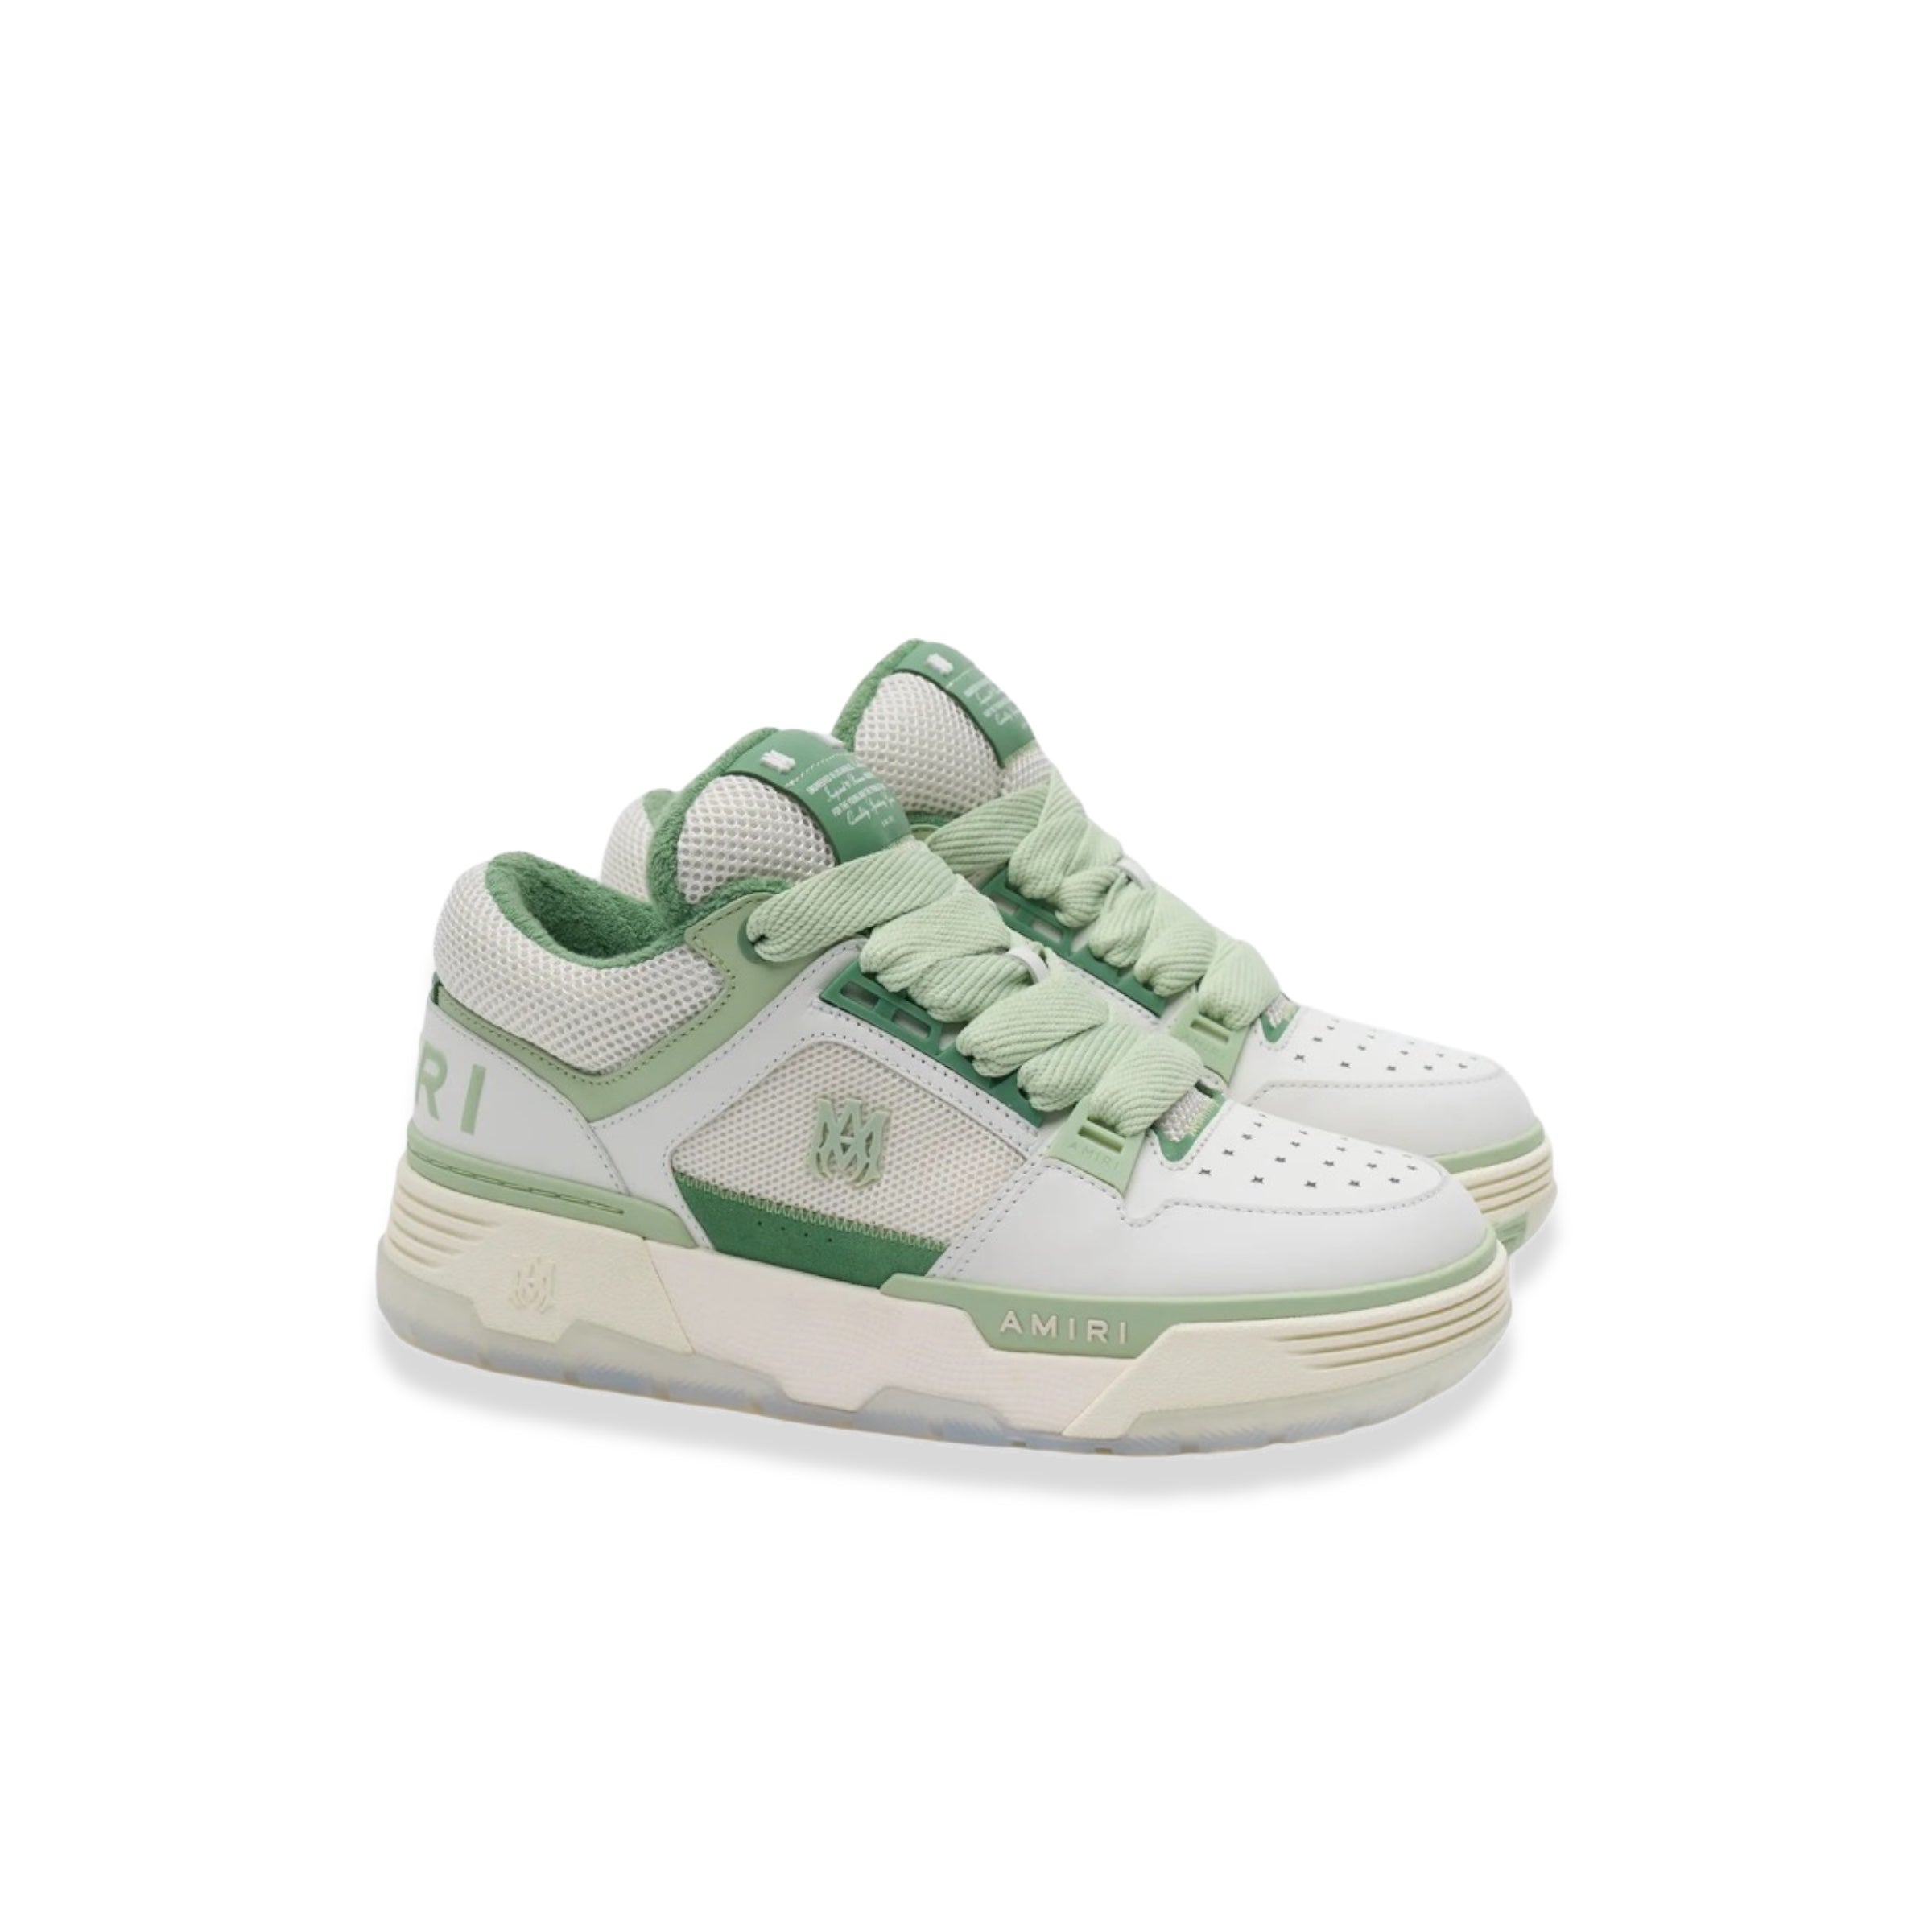 Amiri - MA1 Sneakers White Light Green